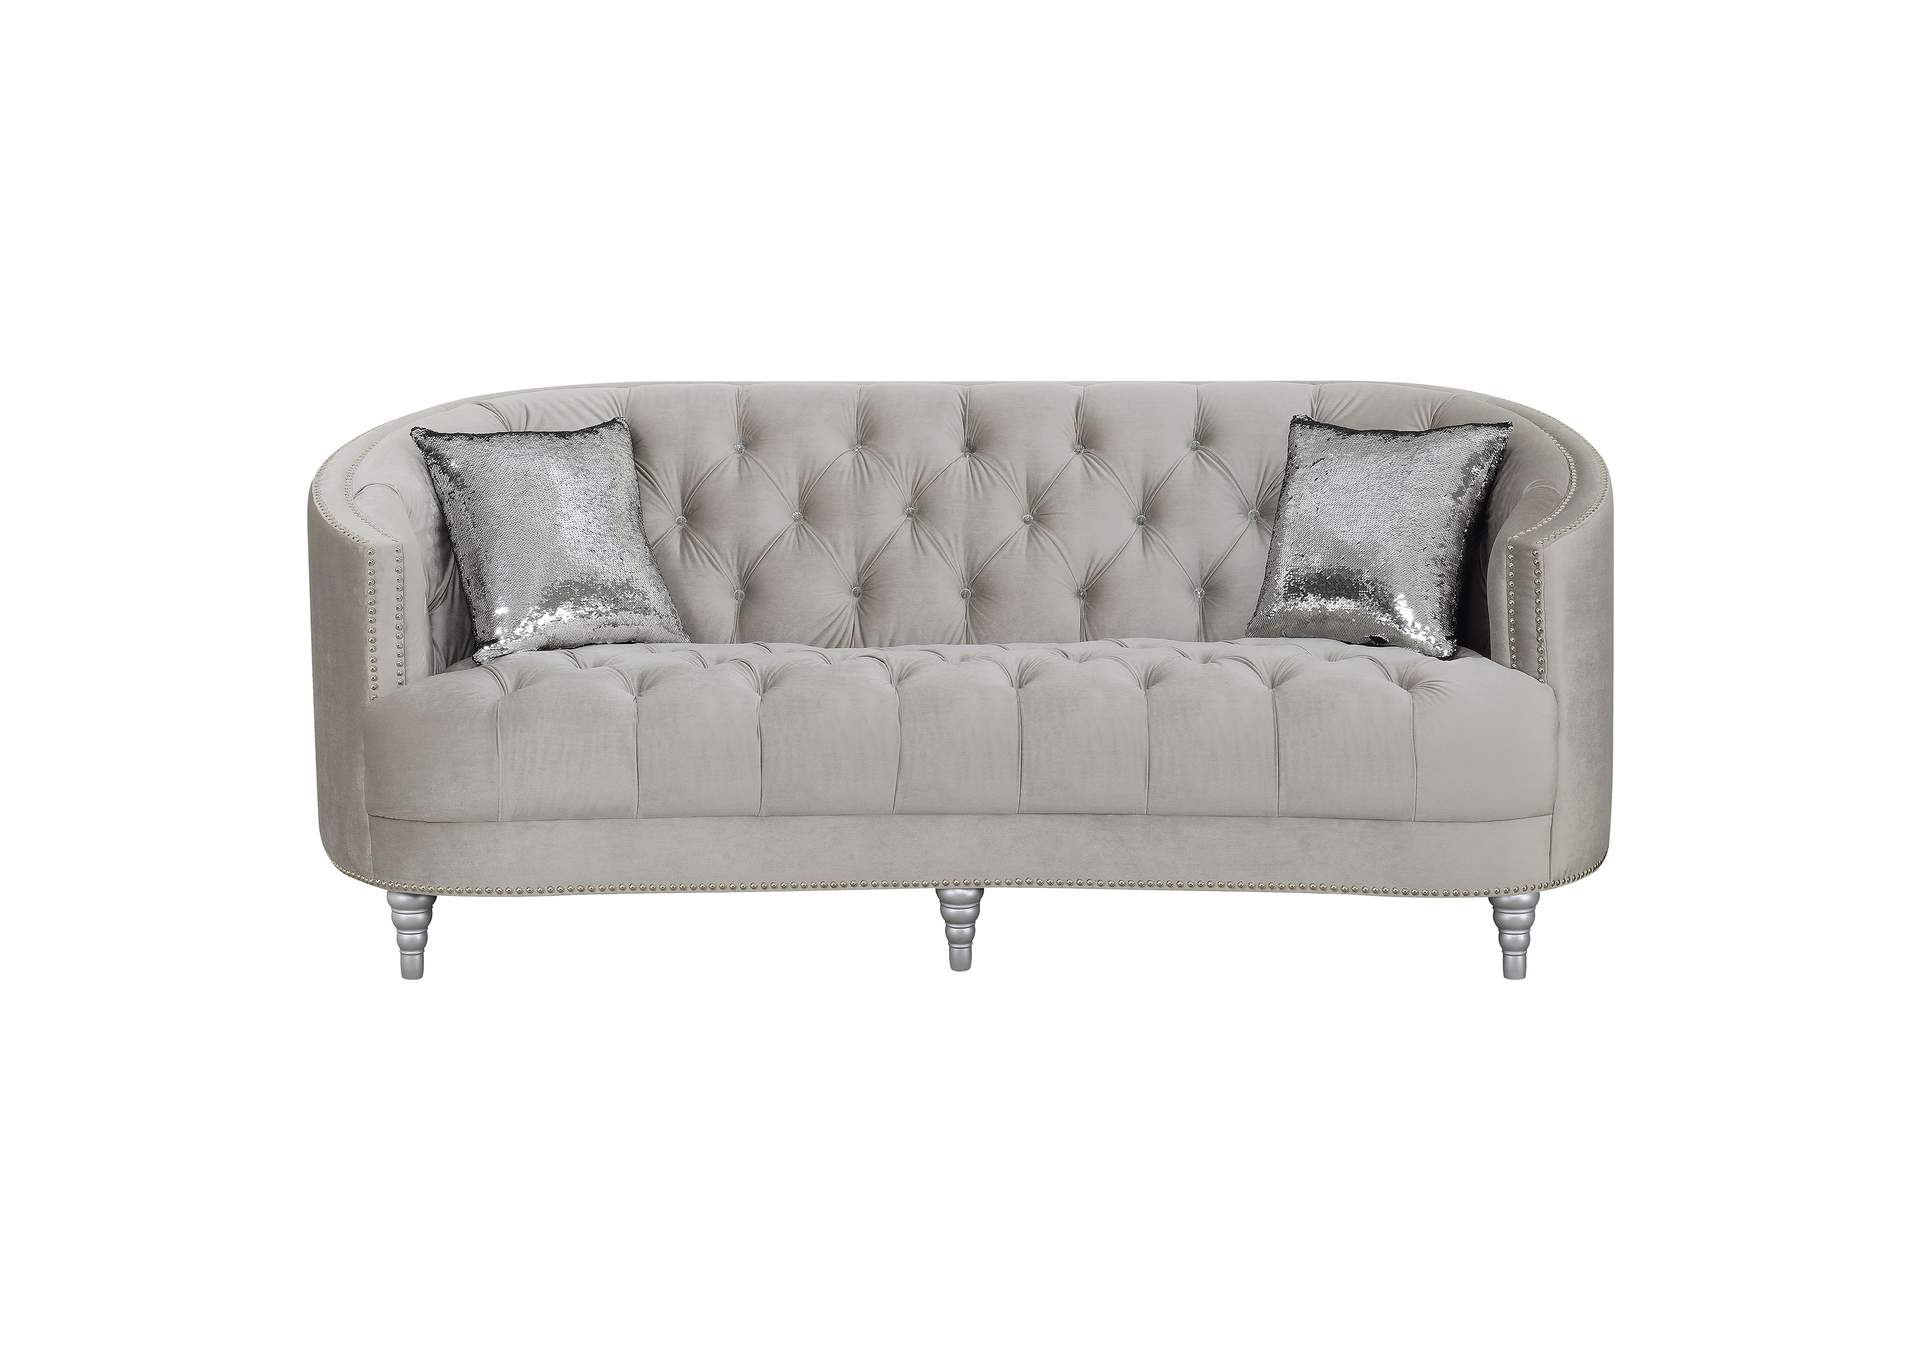 Avonlea 3-piece Tufted Living Room Set Grey,Coaster Furniture